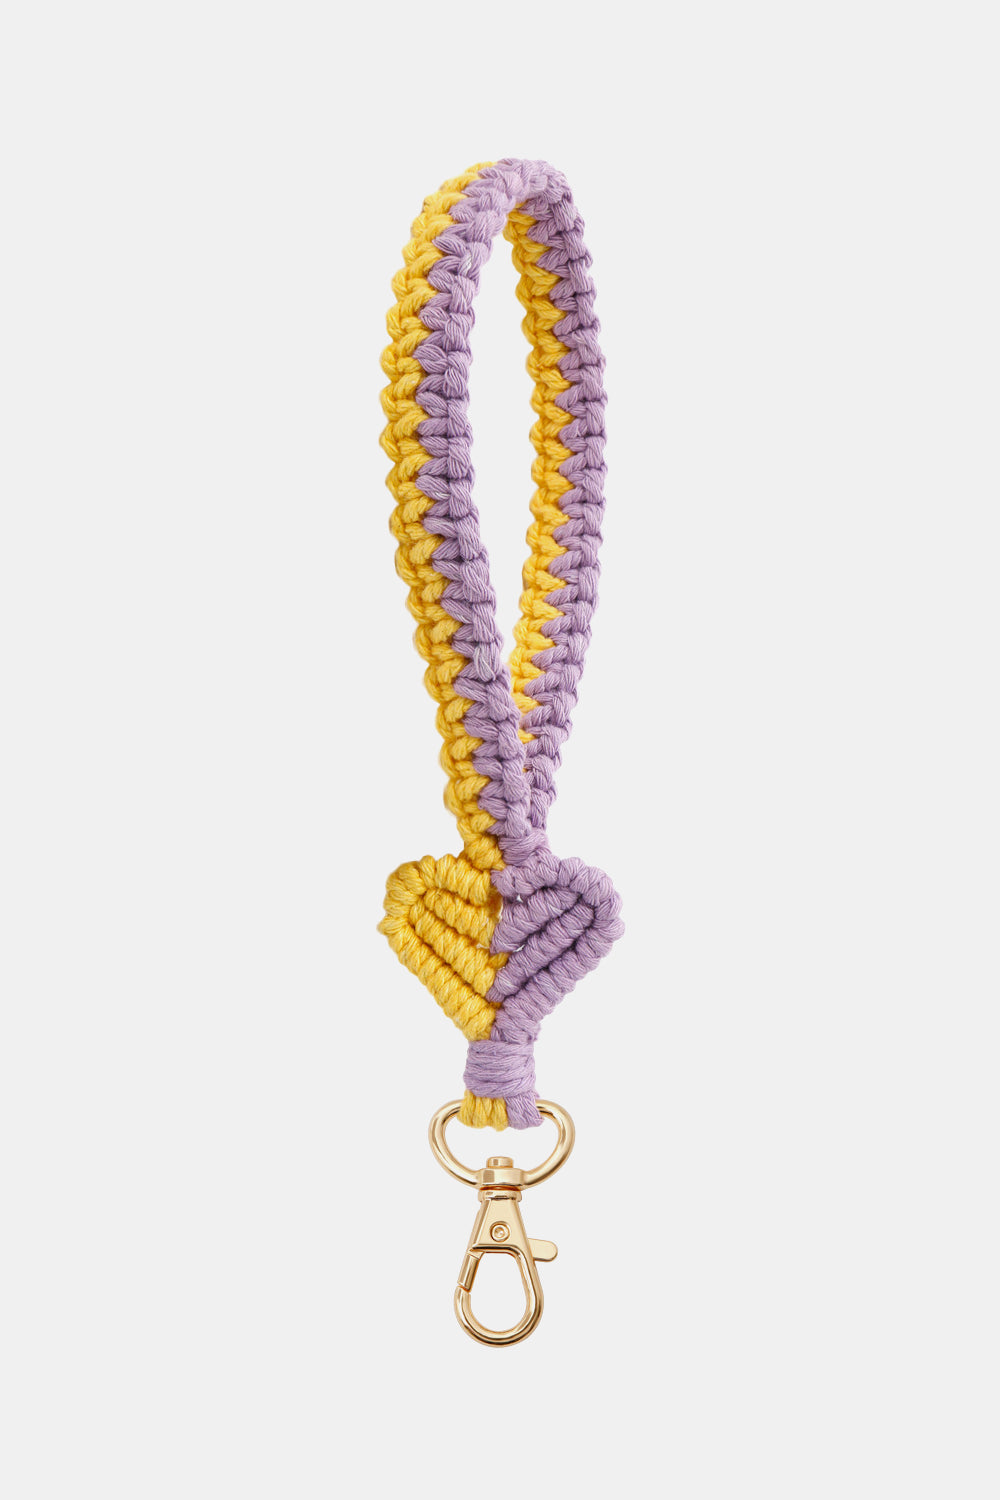 Trendsi Cupid Beauty Supplies Lavender / One Size Keychains Heart Shape Macrame Key Chain